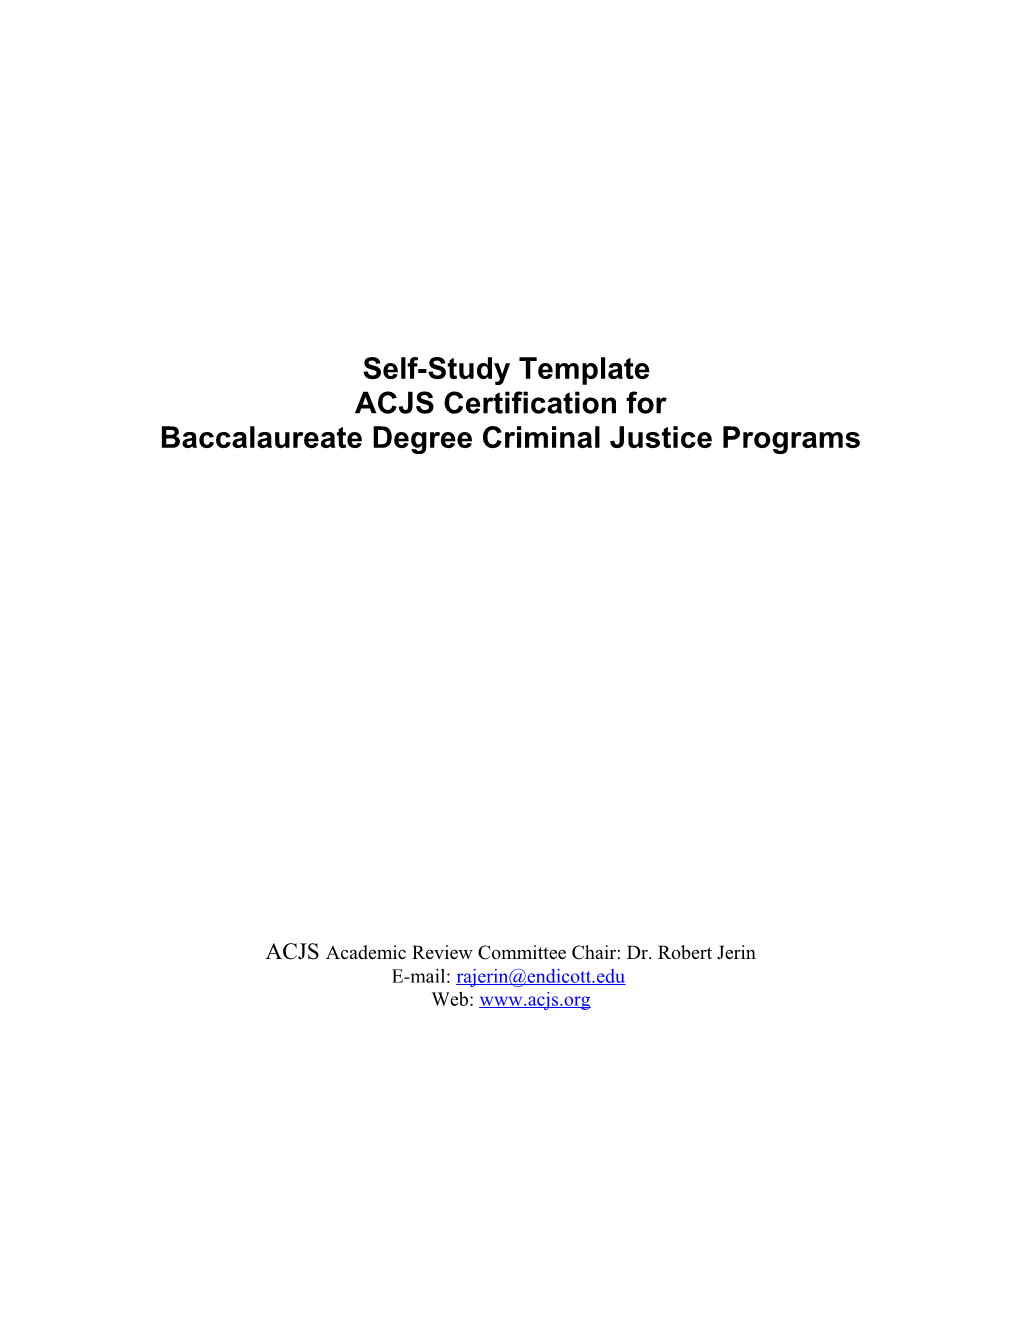 Self-Study for ACJS Certification for Criminal Justice Programs